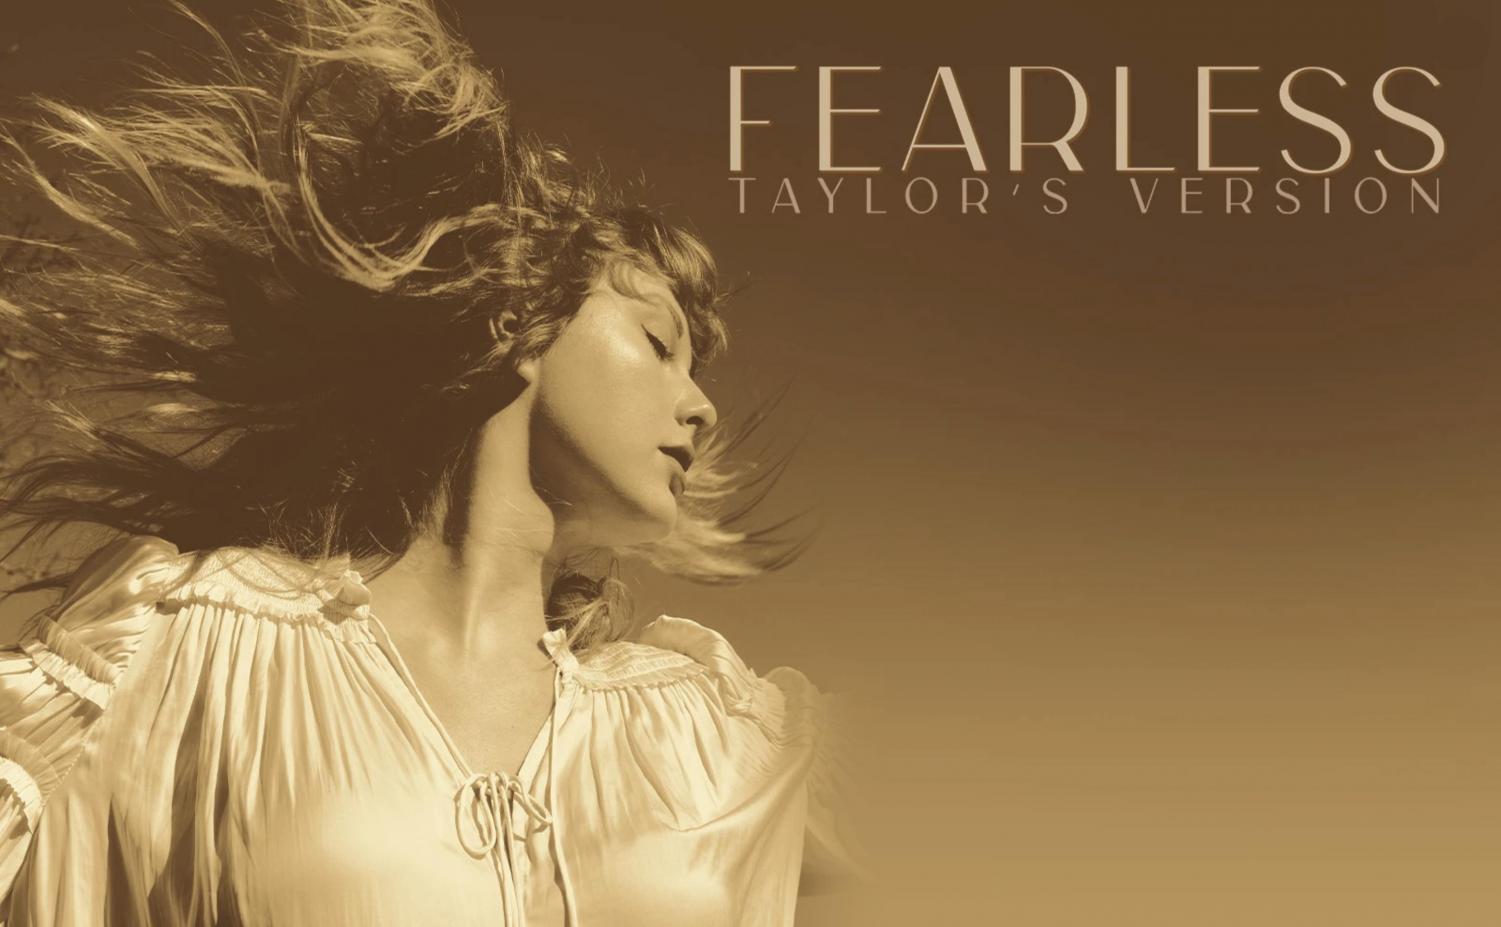 Taylor Swift's Original Album Covers vs. the New 'Taylor's Version' Artwork